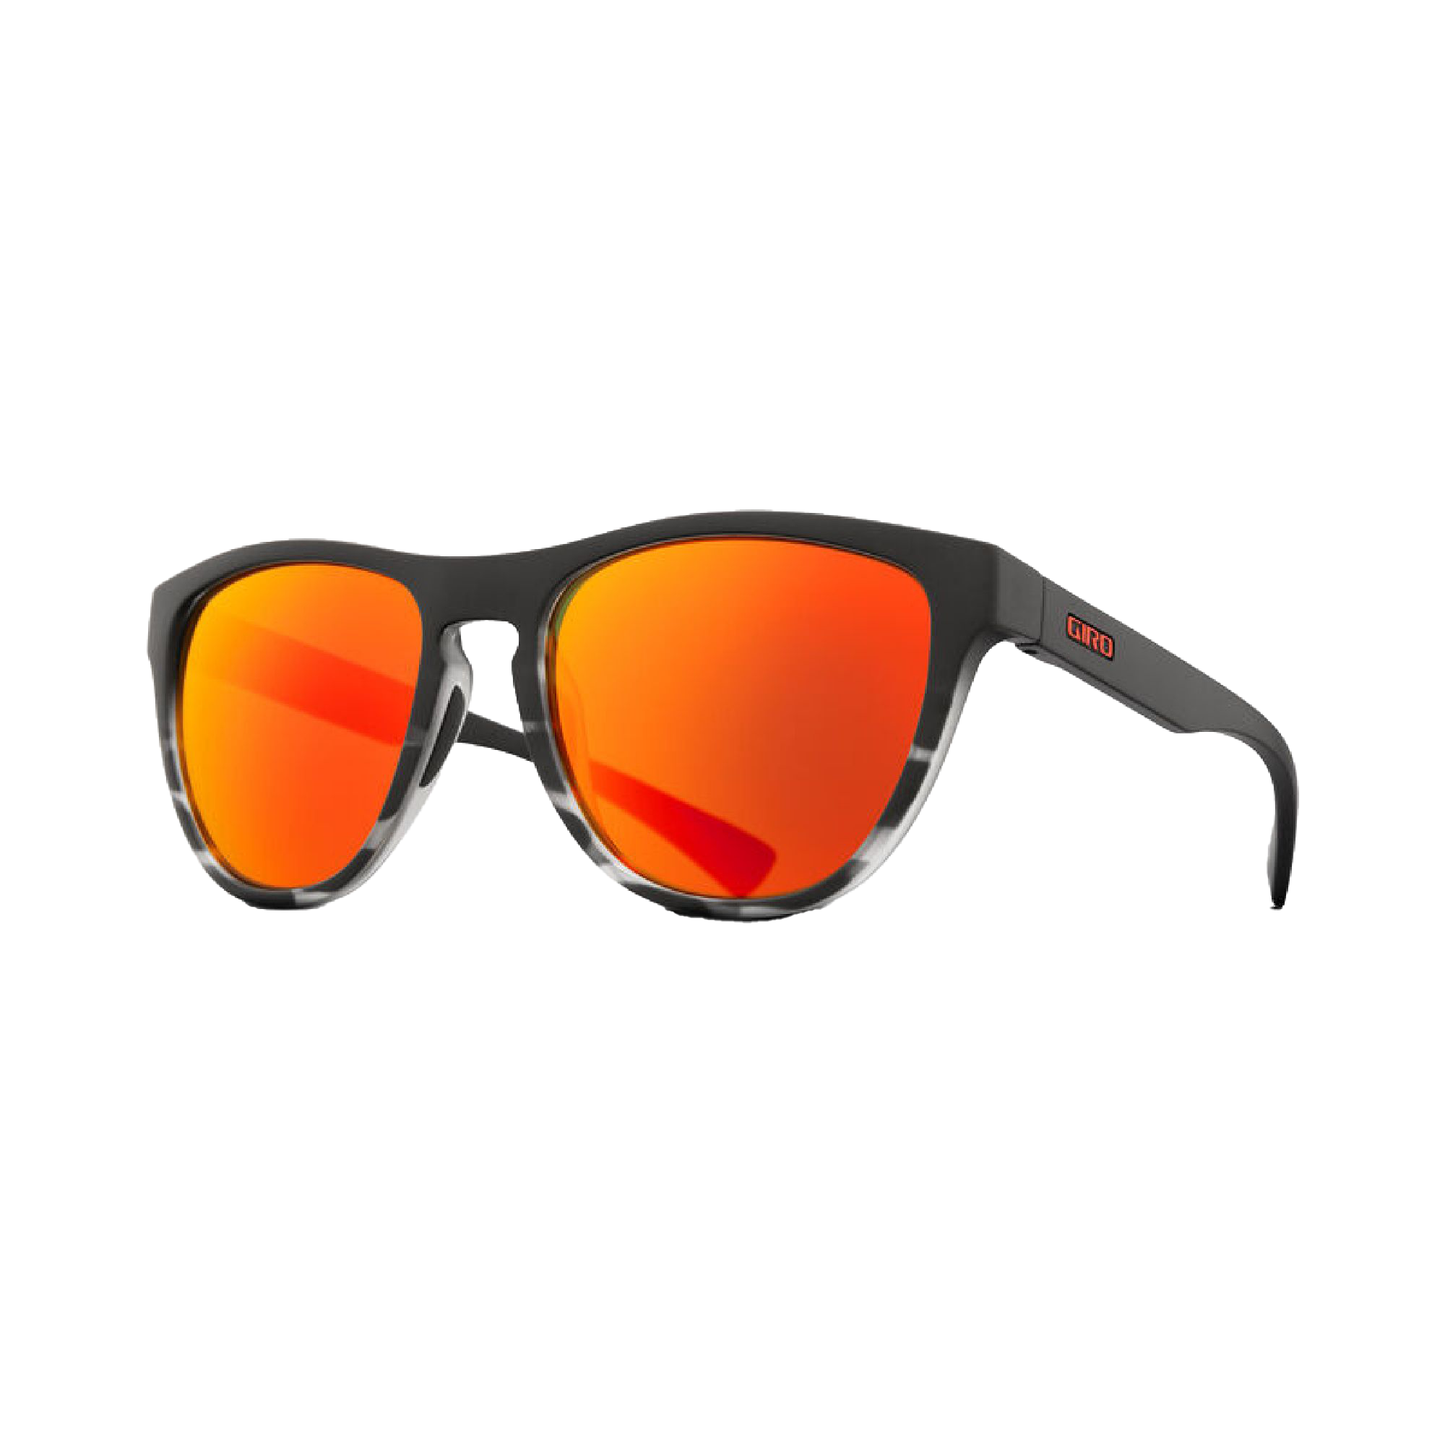 Giro Mills Sunglasses Matte Black Tortoise Fade VIVID Ember Sunglasses